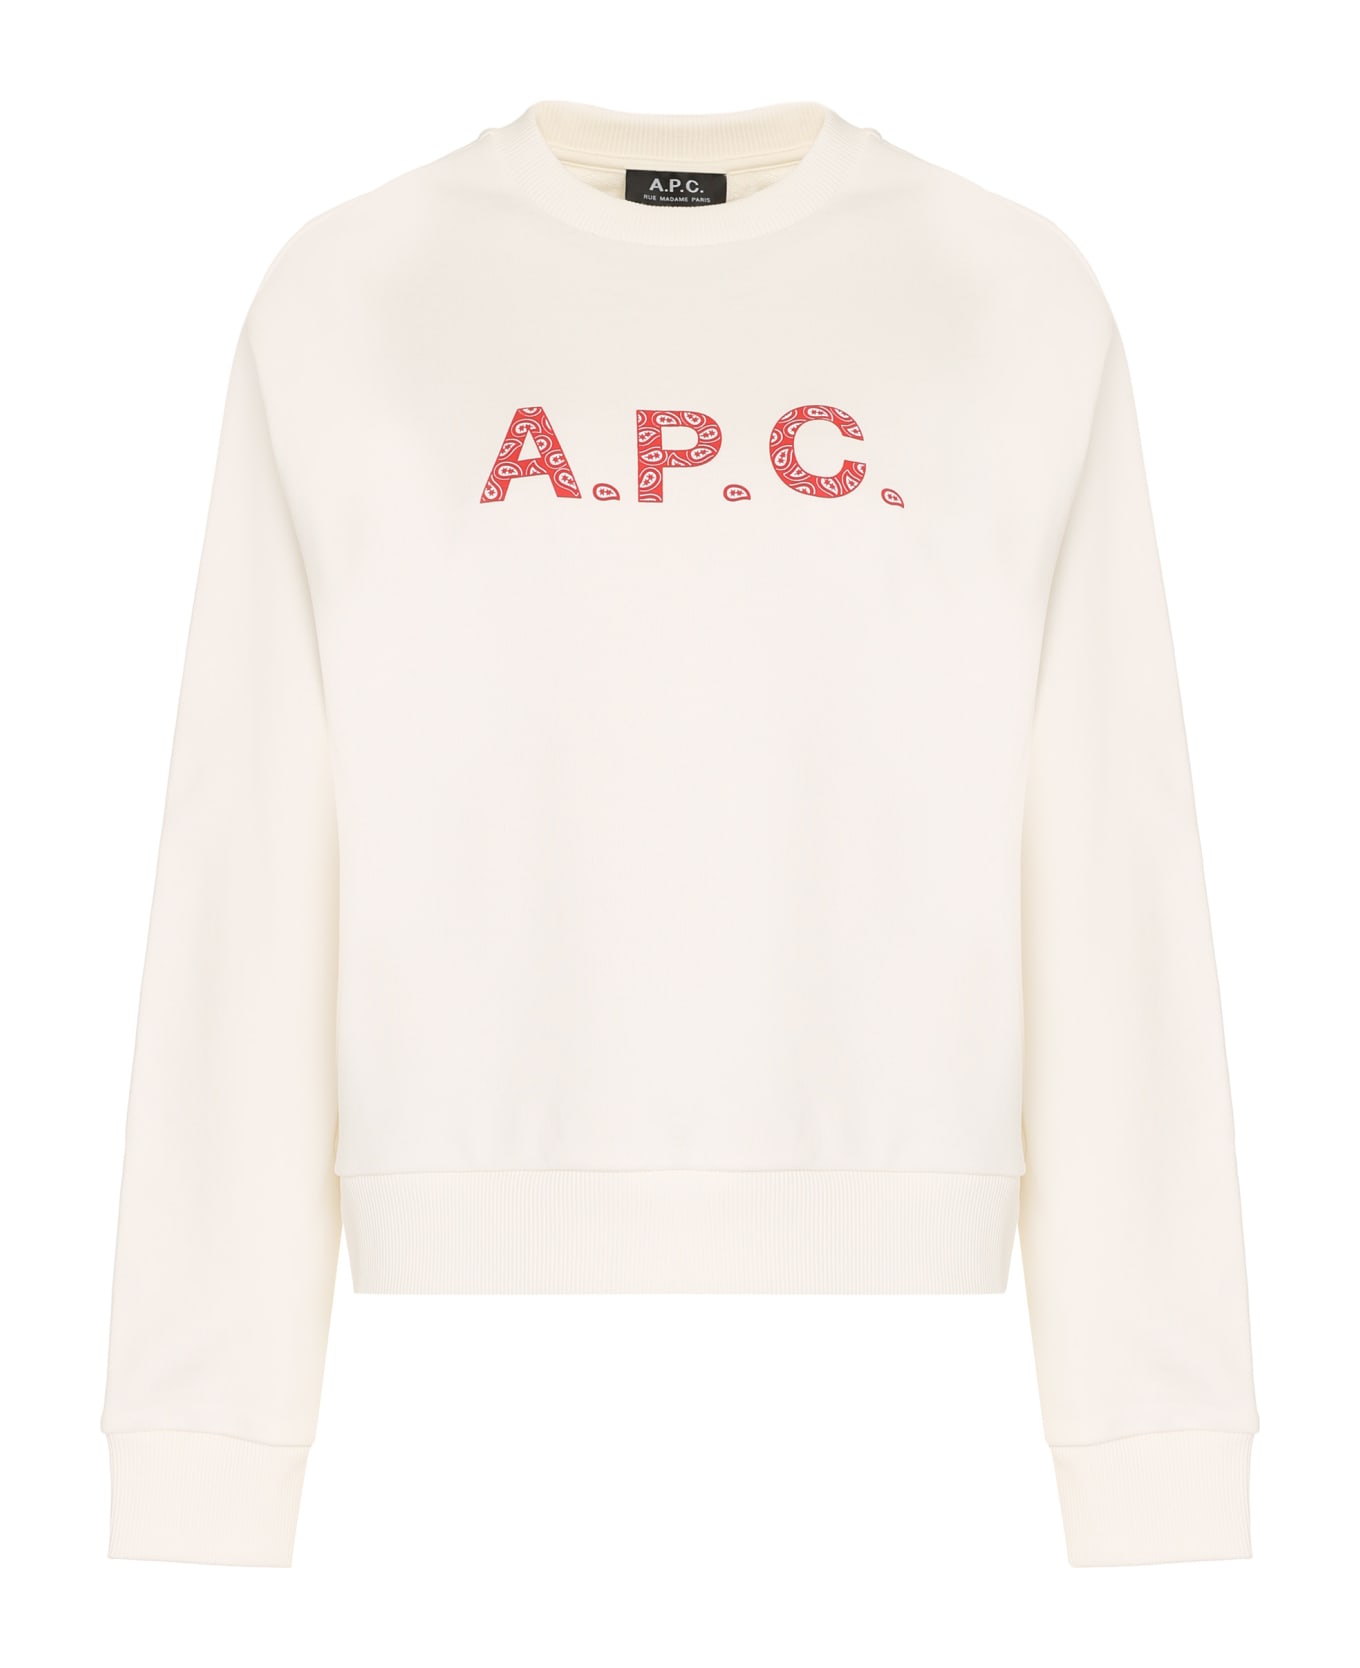 A.P.C. Patty Crew-neck Sweatshirt - White